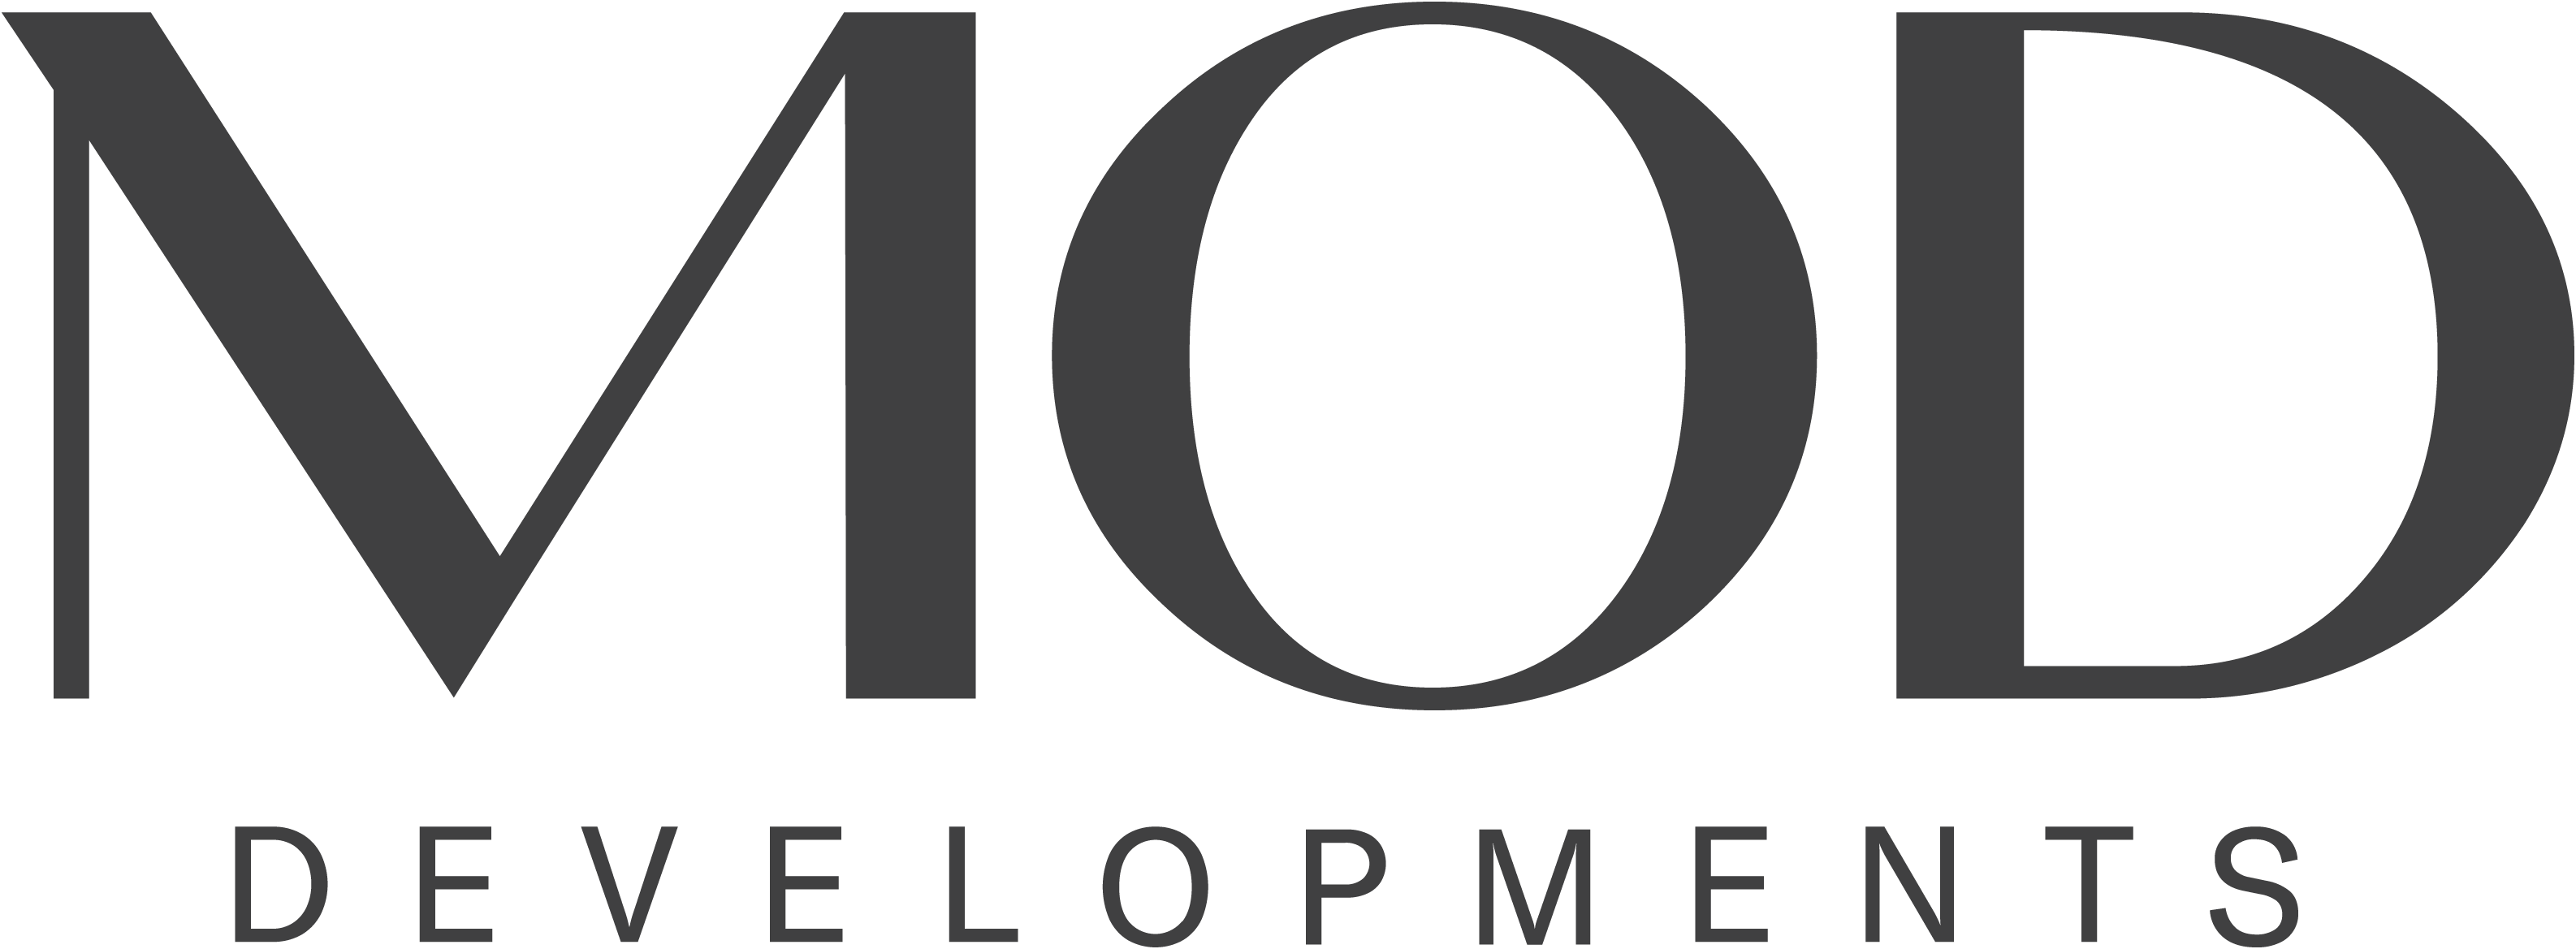 MOD Development logo